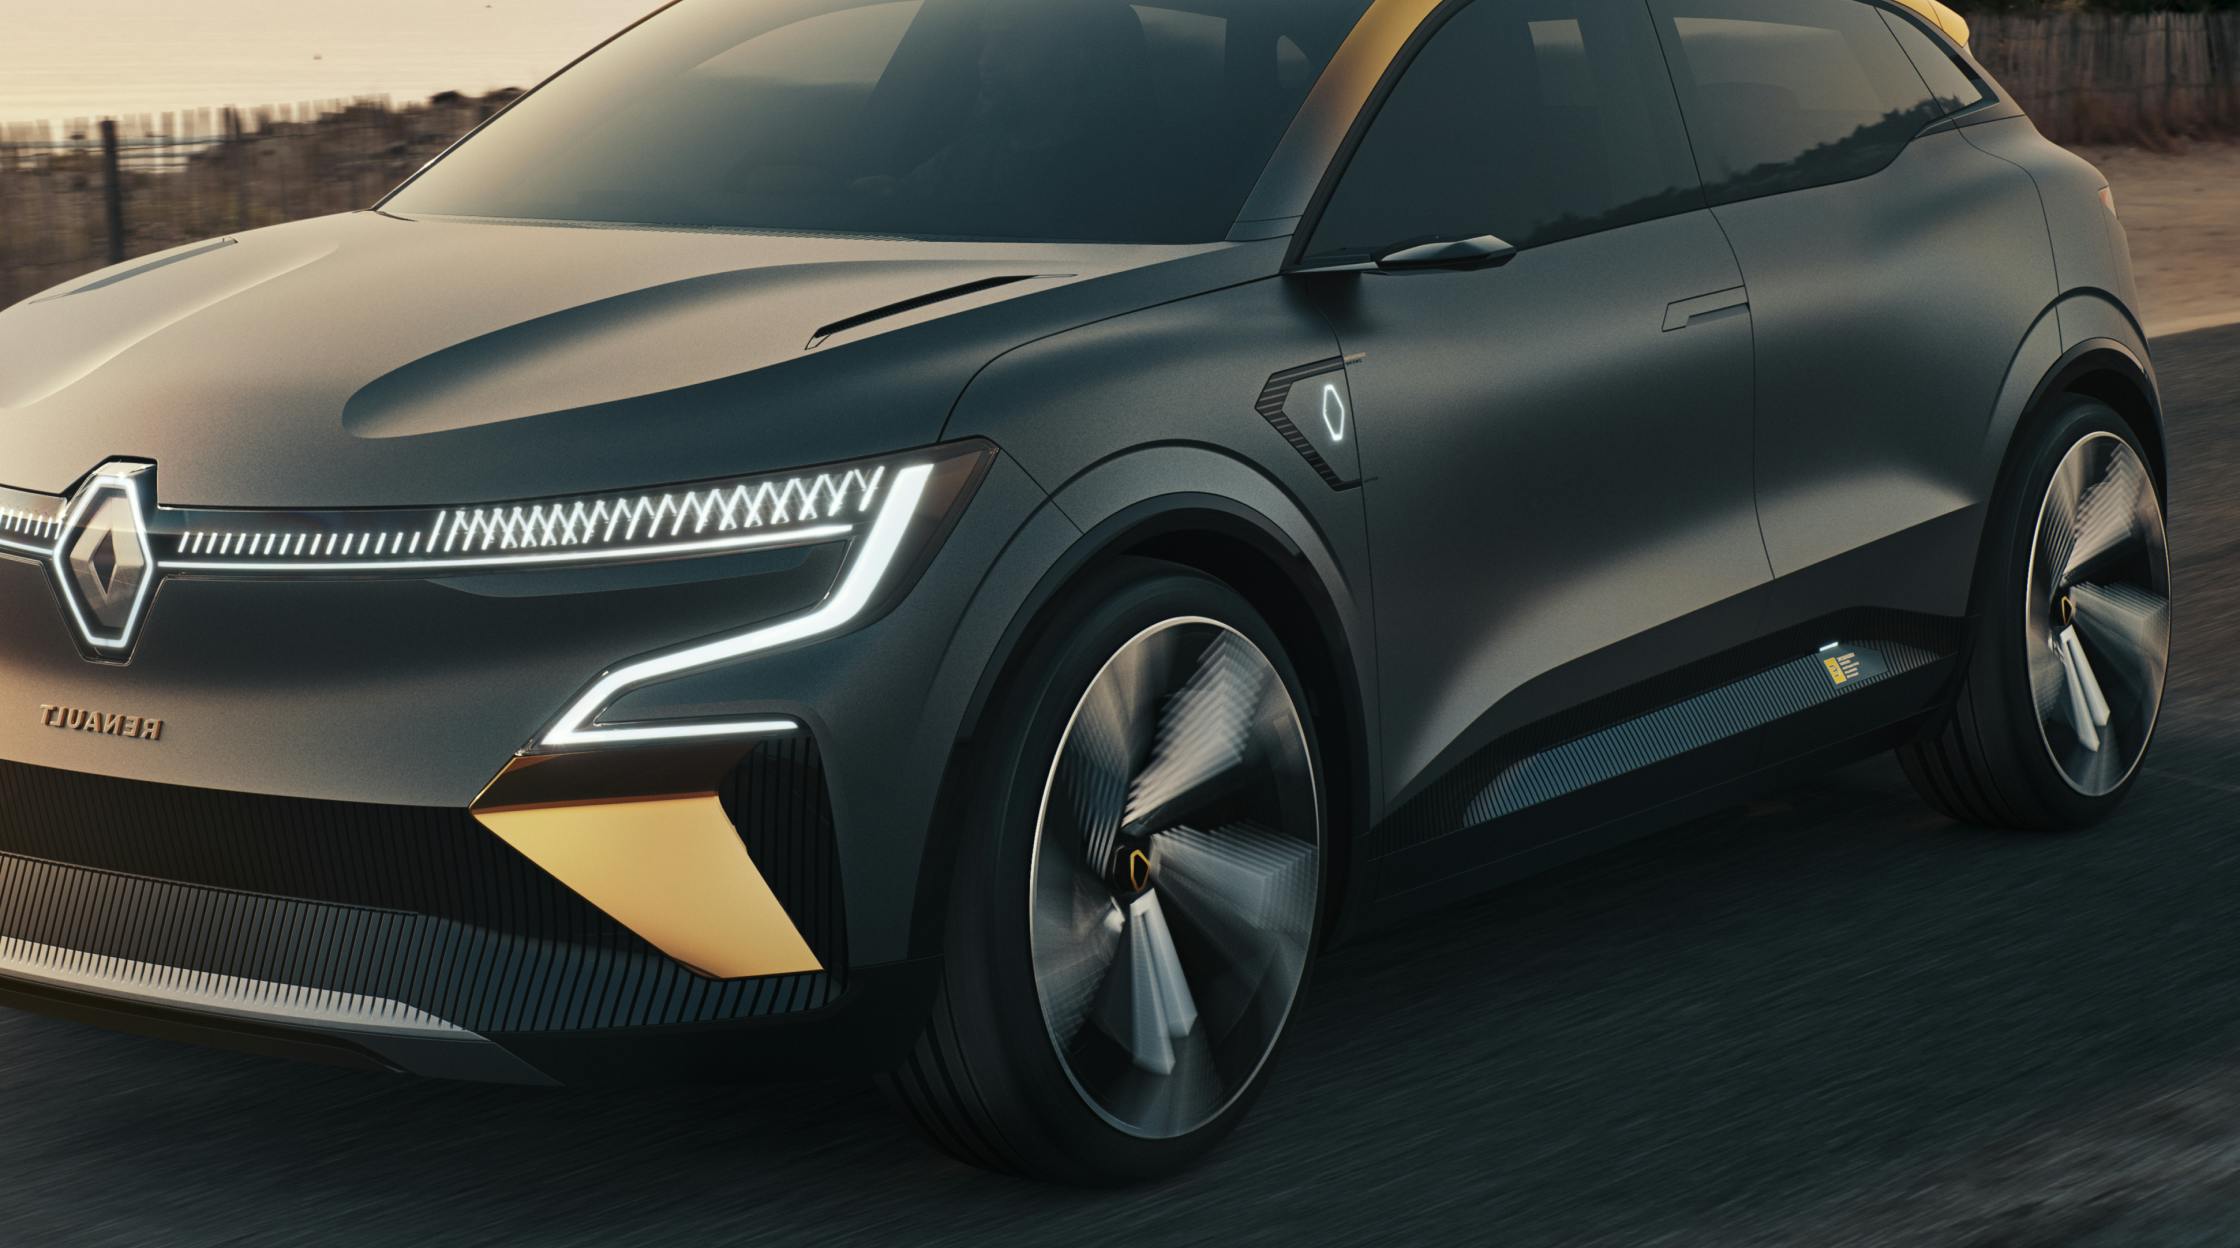 new Renault Concept Car